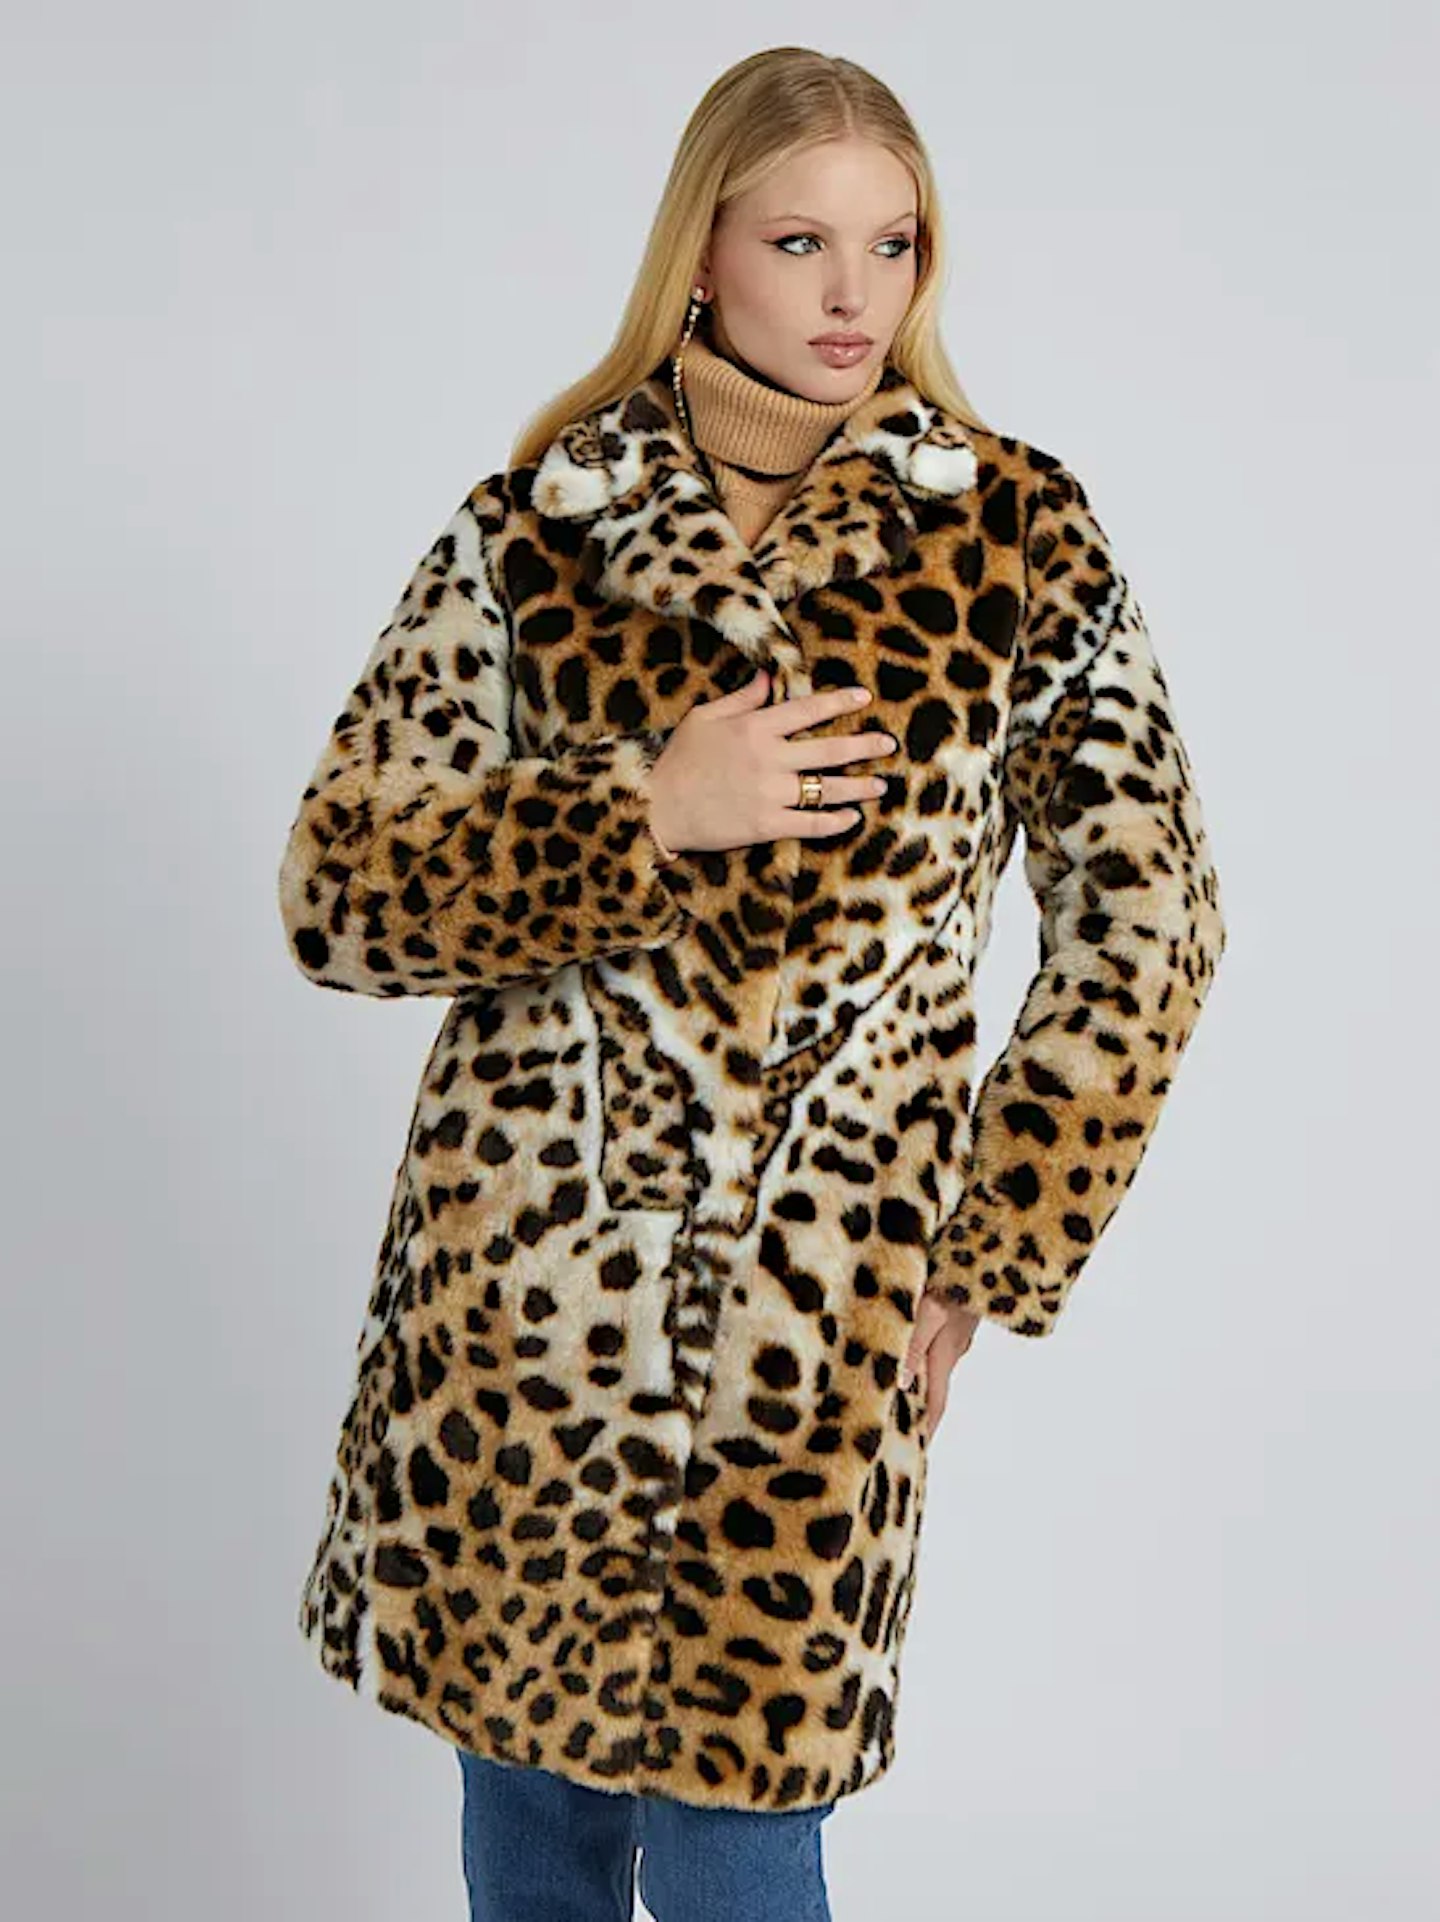 Stylish Leopard Print Coats We’re Loving This Autumn